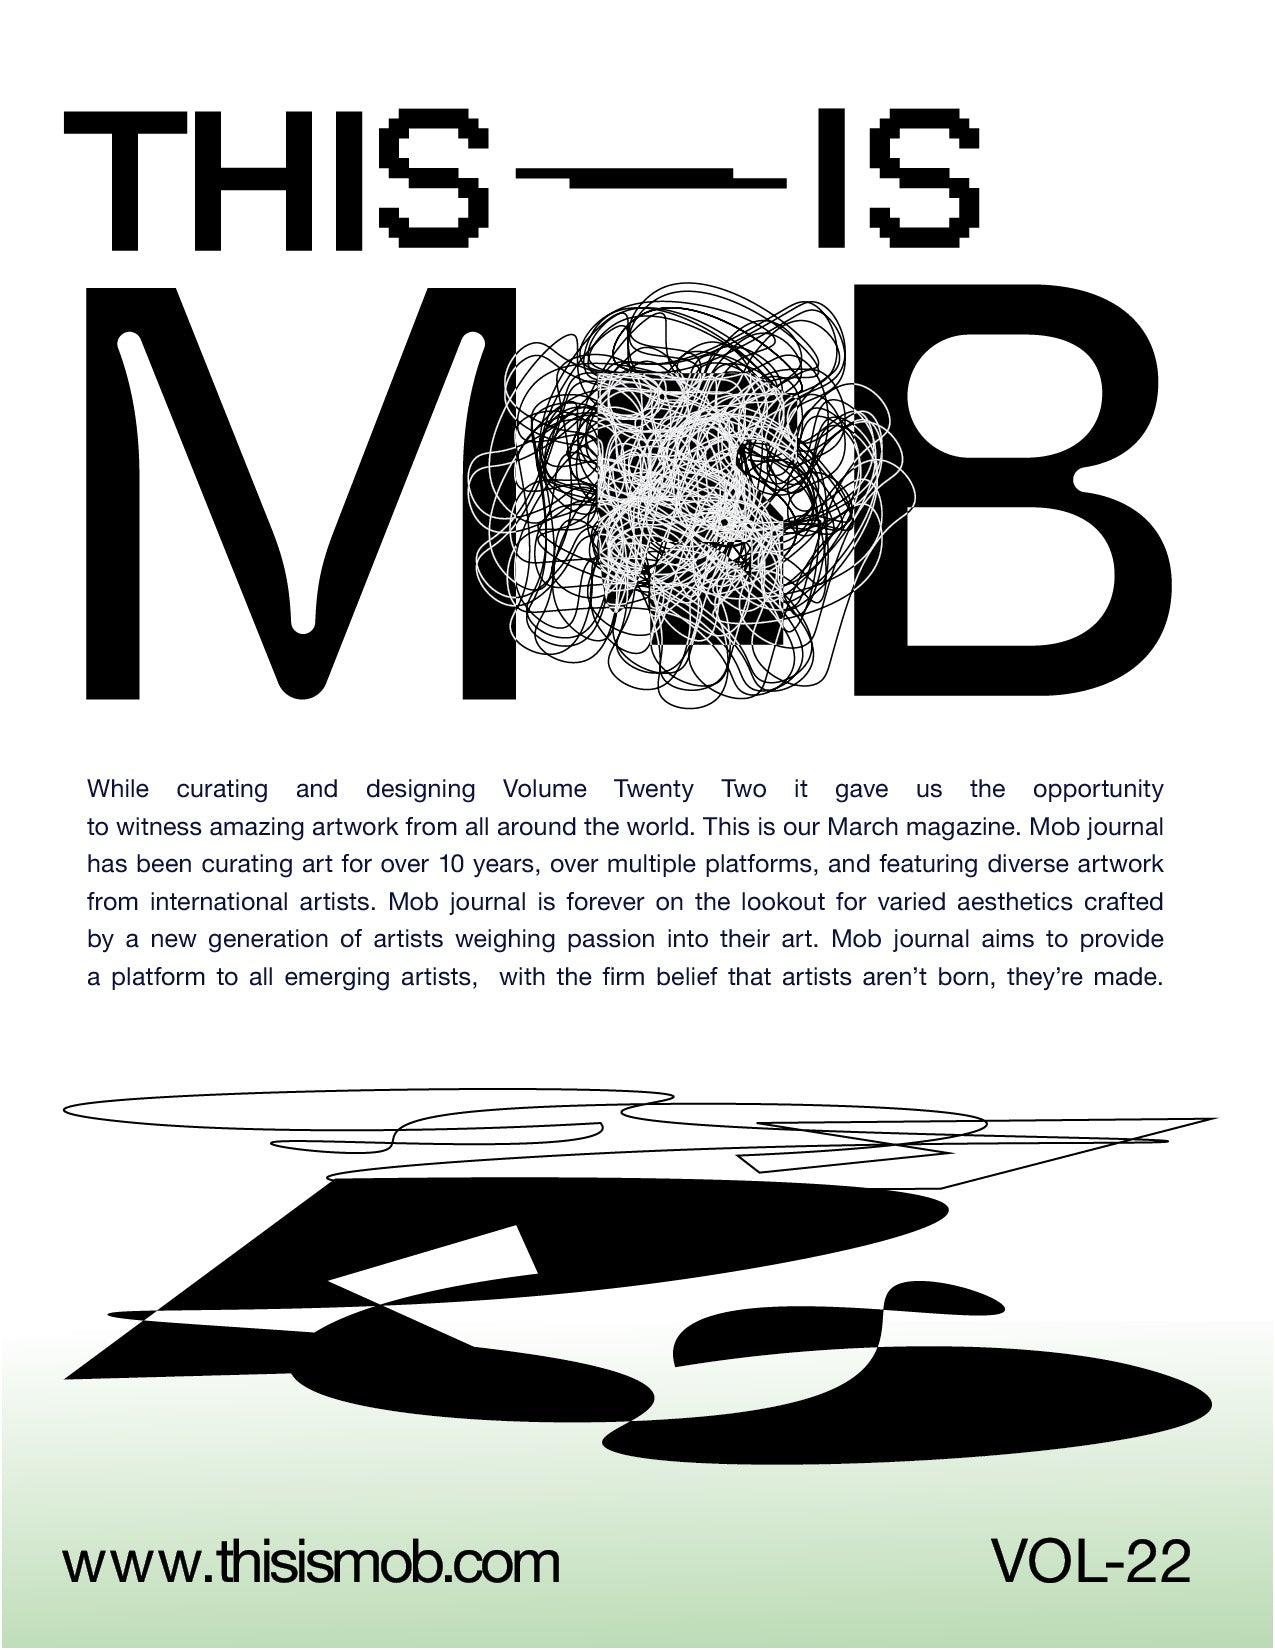 MOB JOURNAL | VOLUME TWENTY TWO | ISSUE #03 - Mob Journal